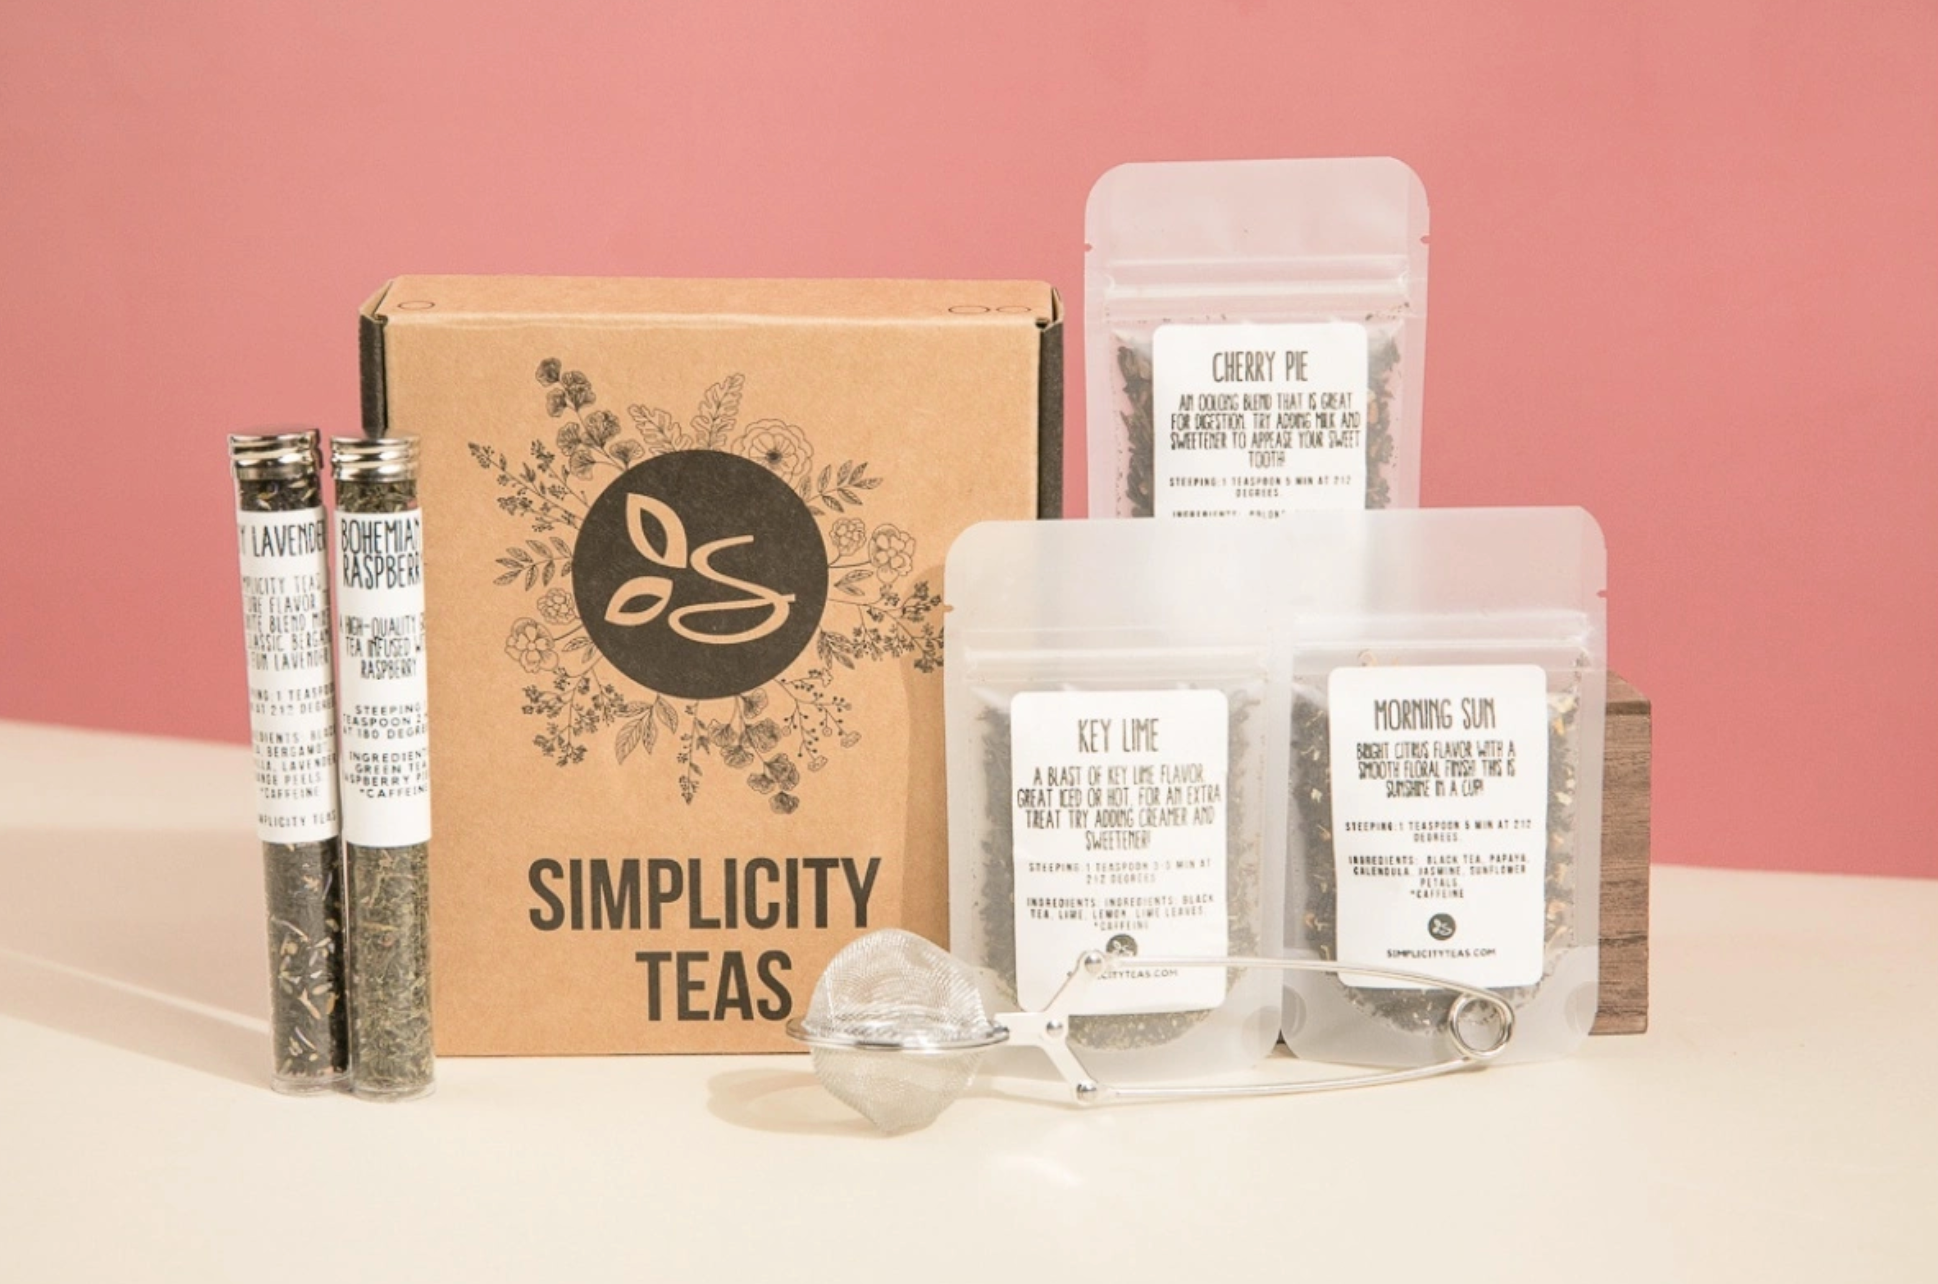 assortment of loose leaf teas and a tea infuser